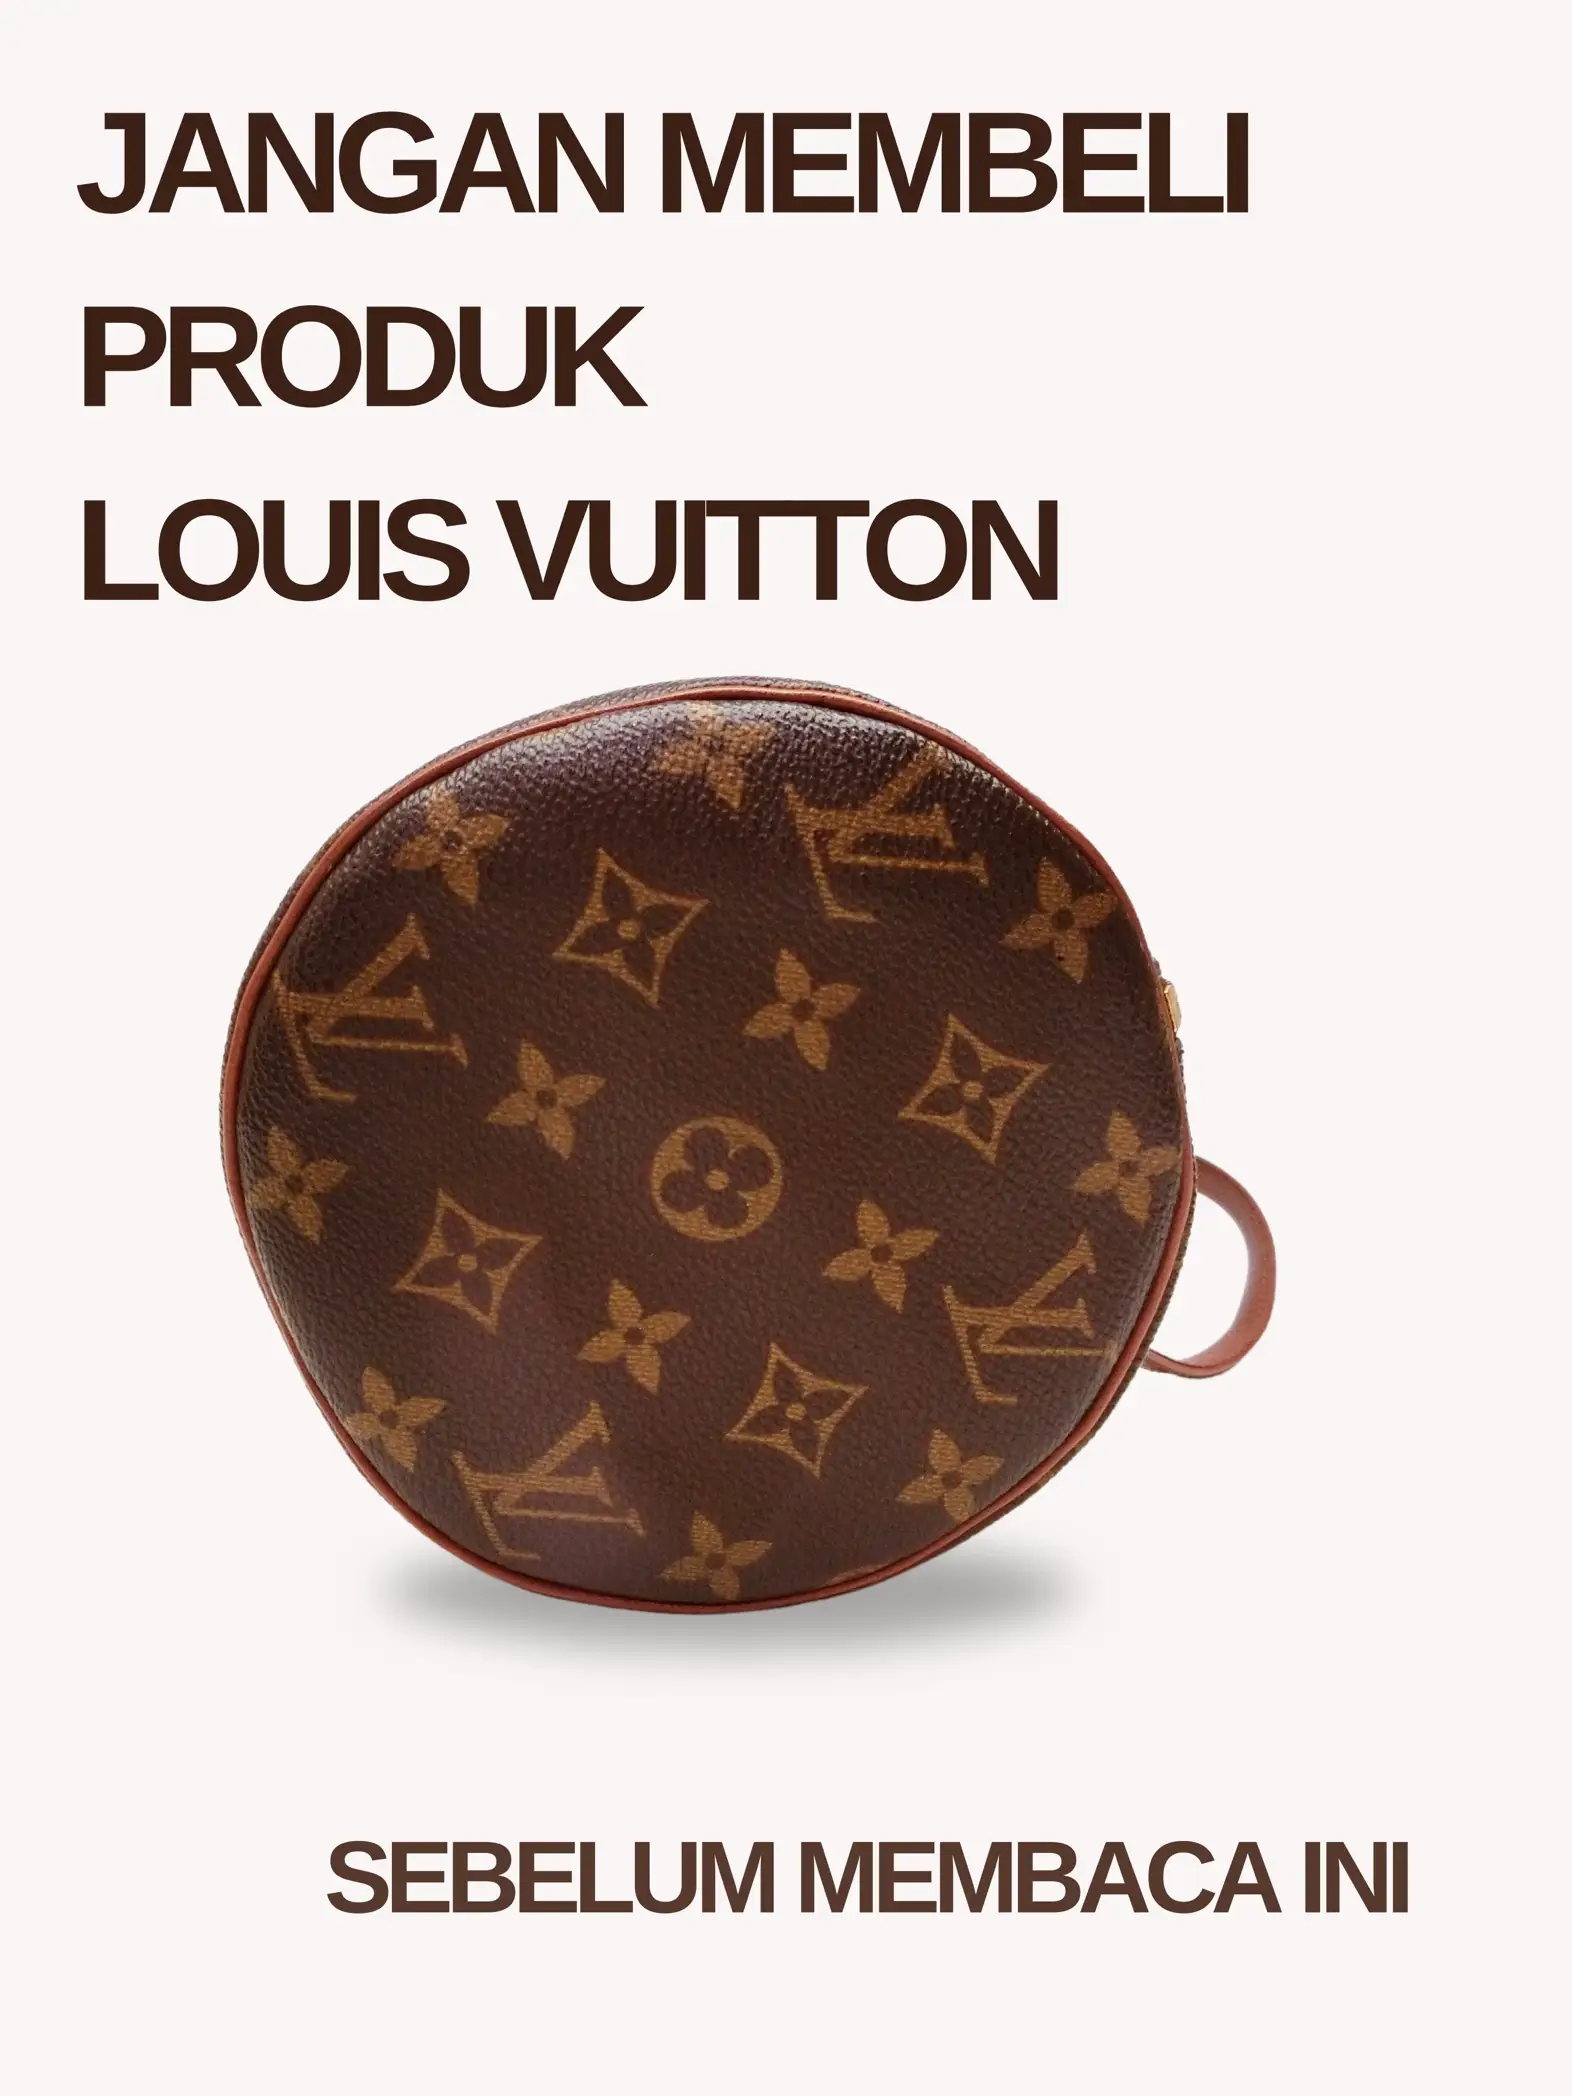 LOUIS VUITTON 2018 Boite Chapeau MM brown LV monogram rounded crossbody bag